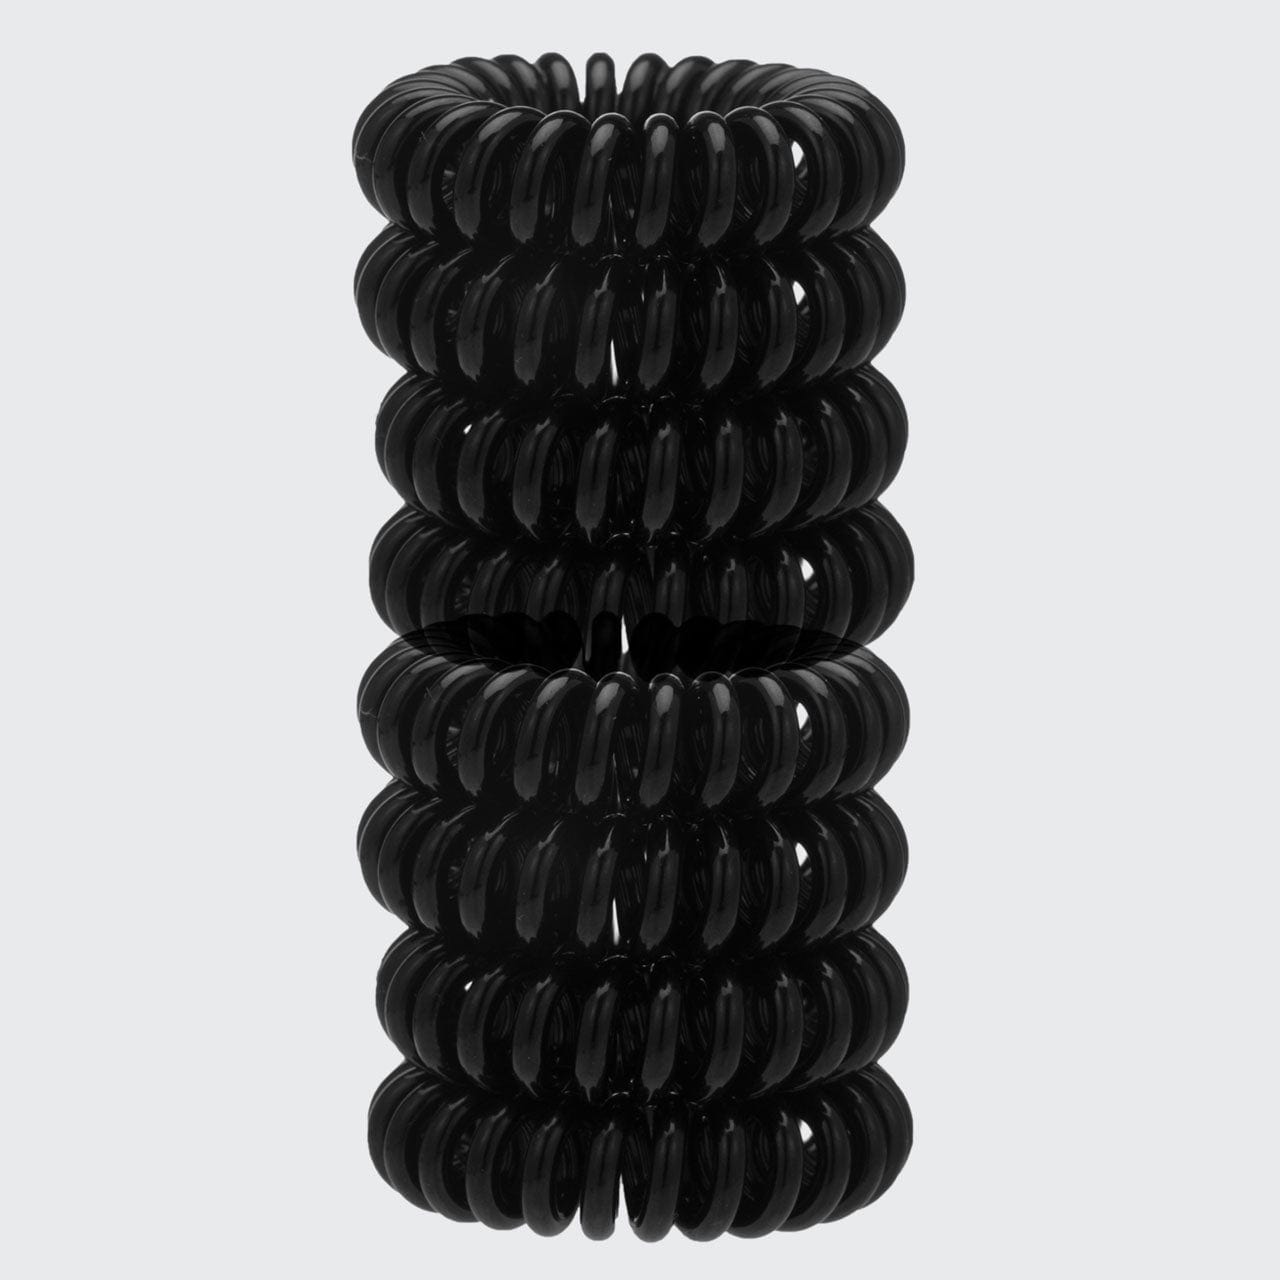 Spiral Hair Ties 8 Pc - Black by KITSCH